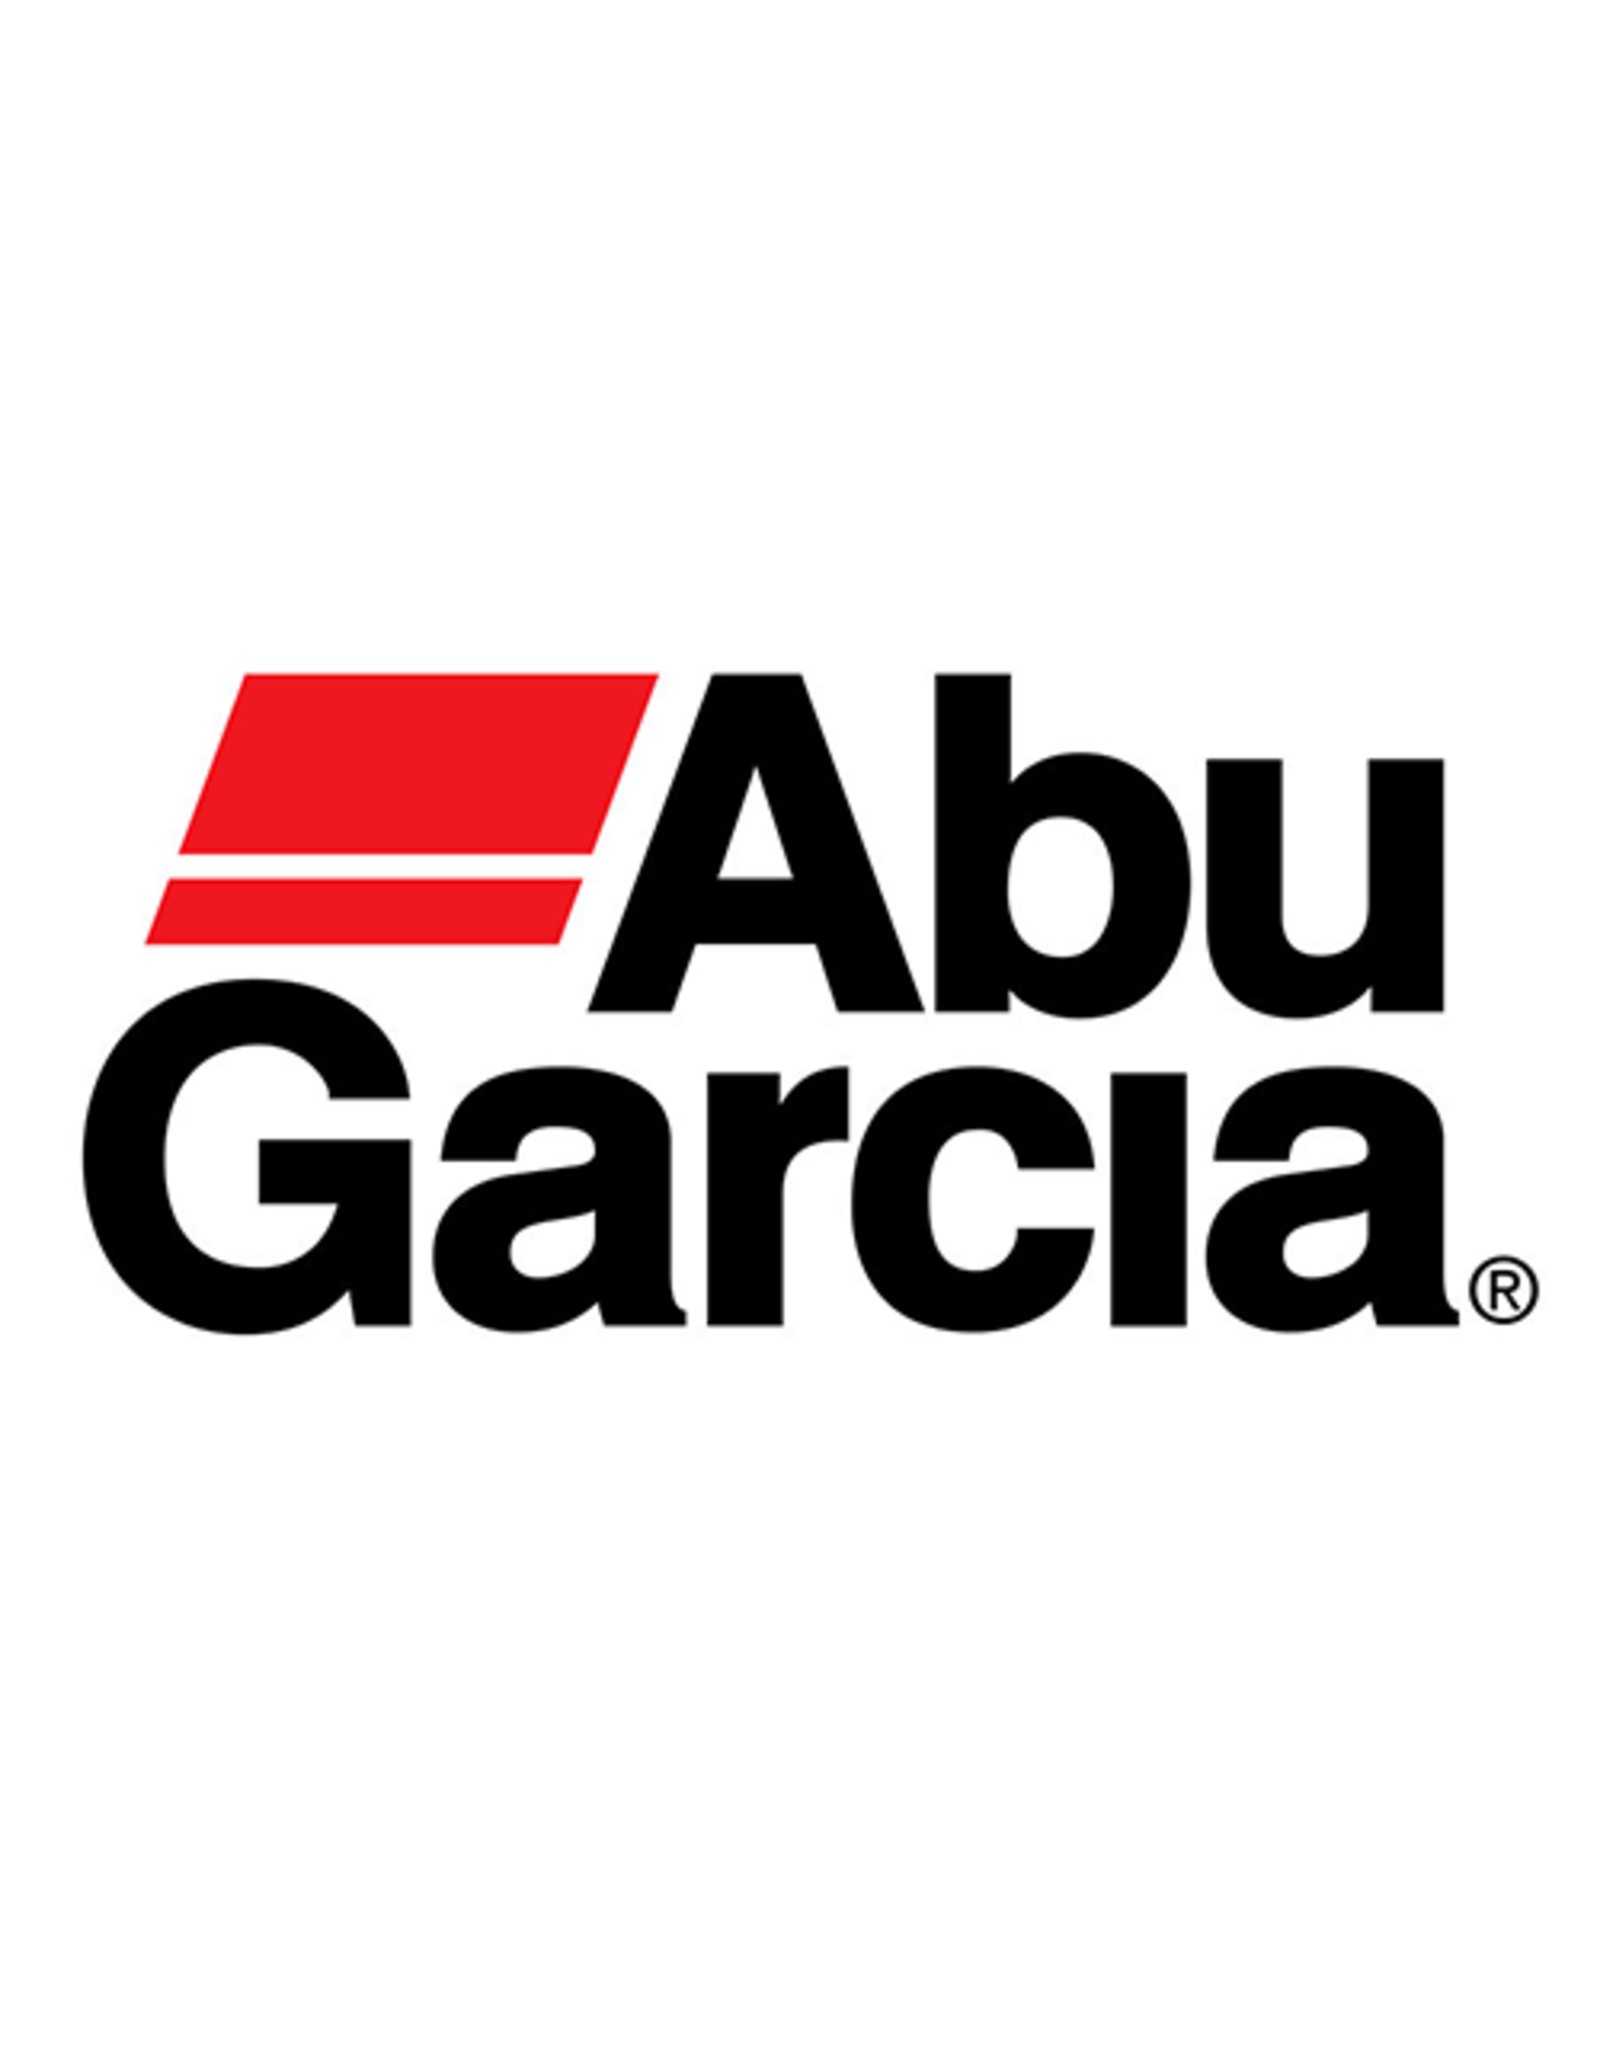 Abu Garcia 1085327  BUSHING